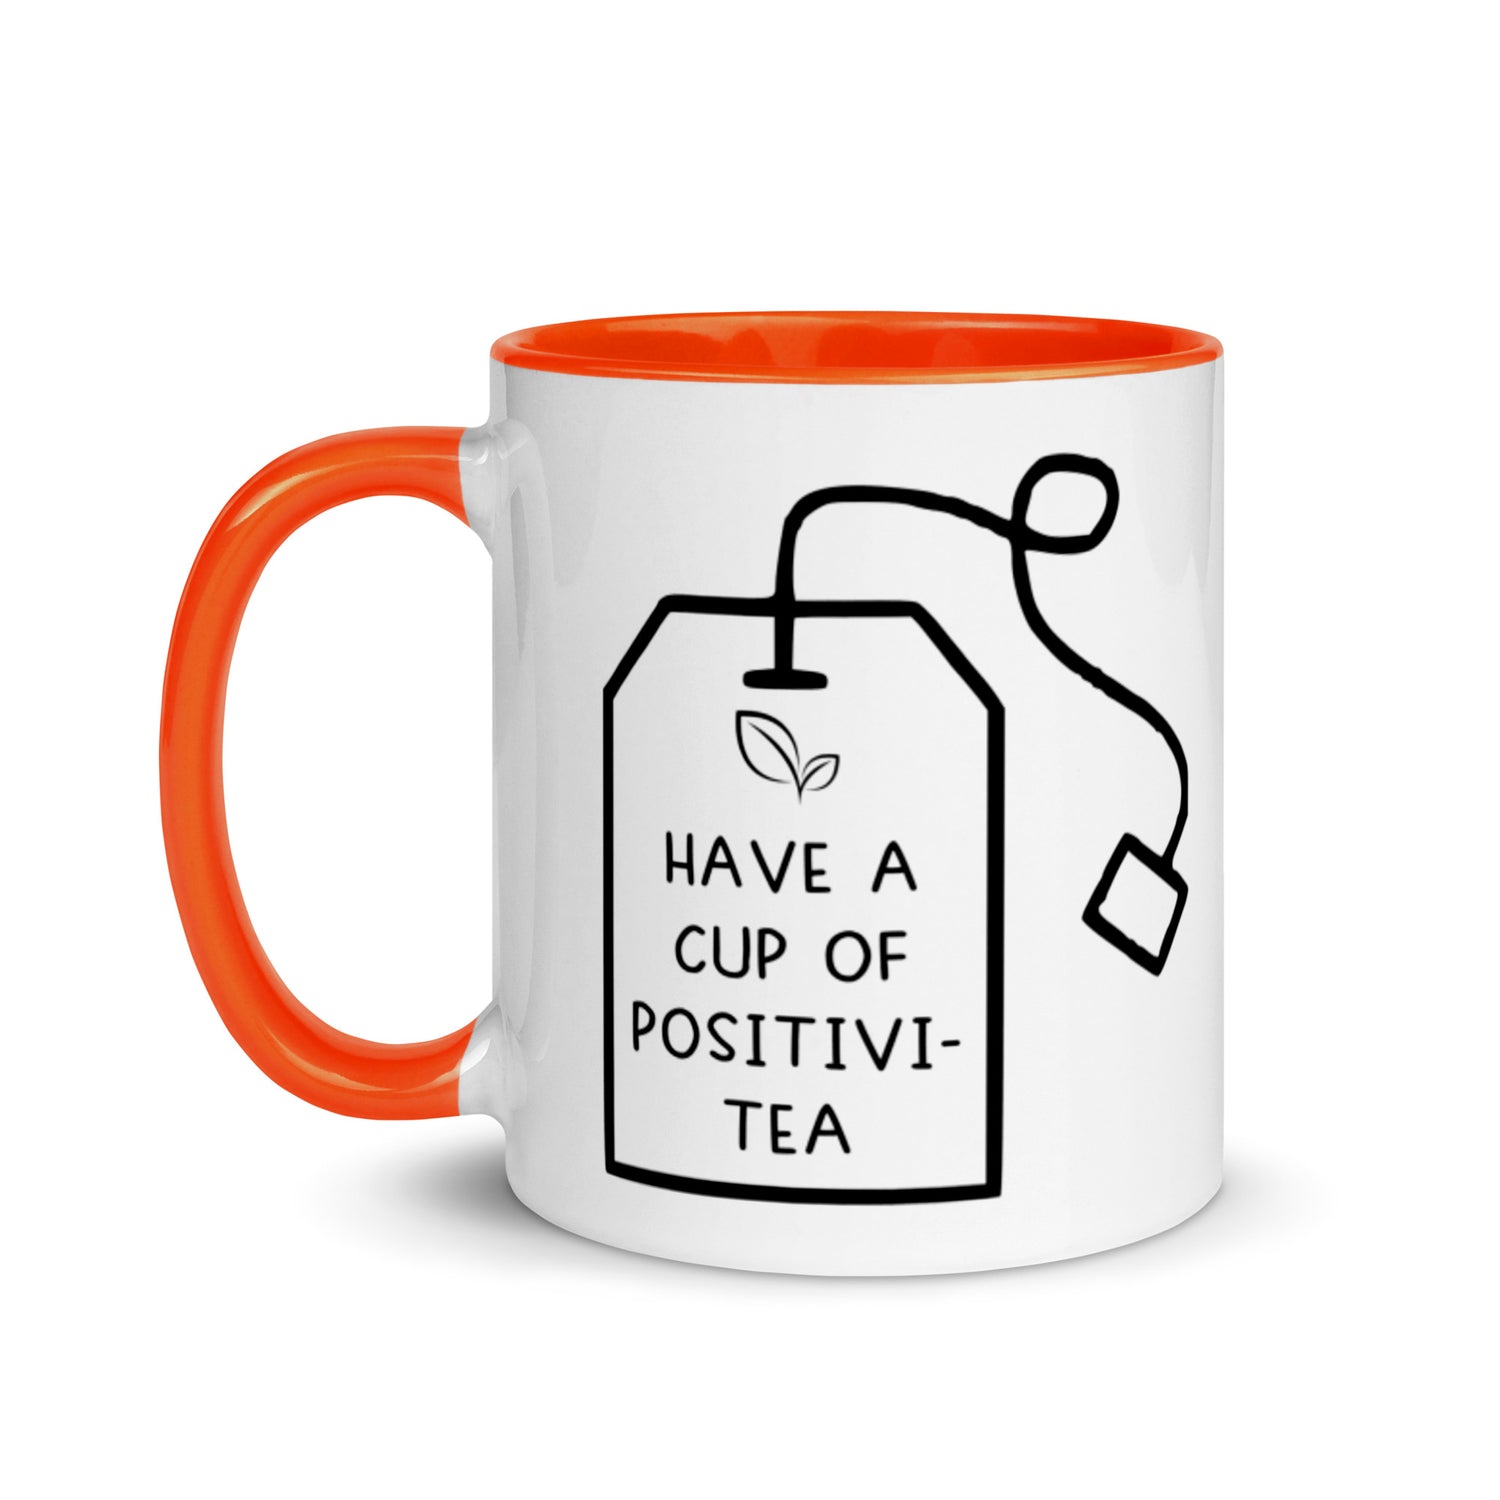 Have a Cup of Positivi-Tea Mug, orange interior and handle